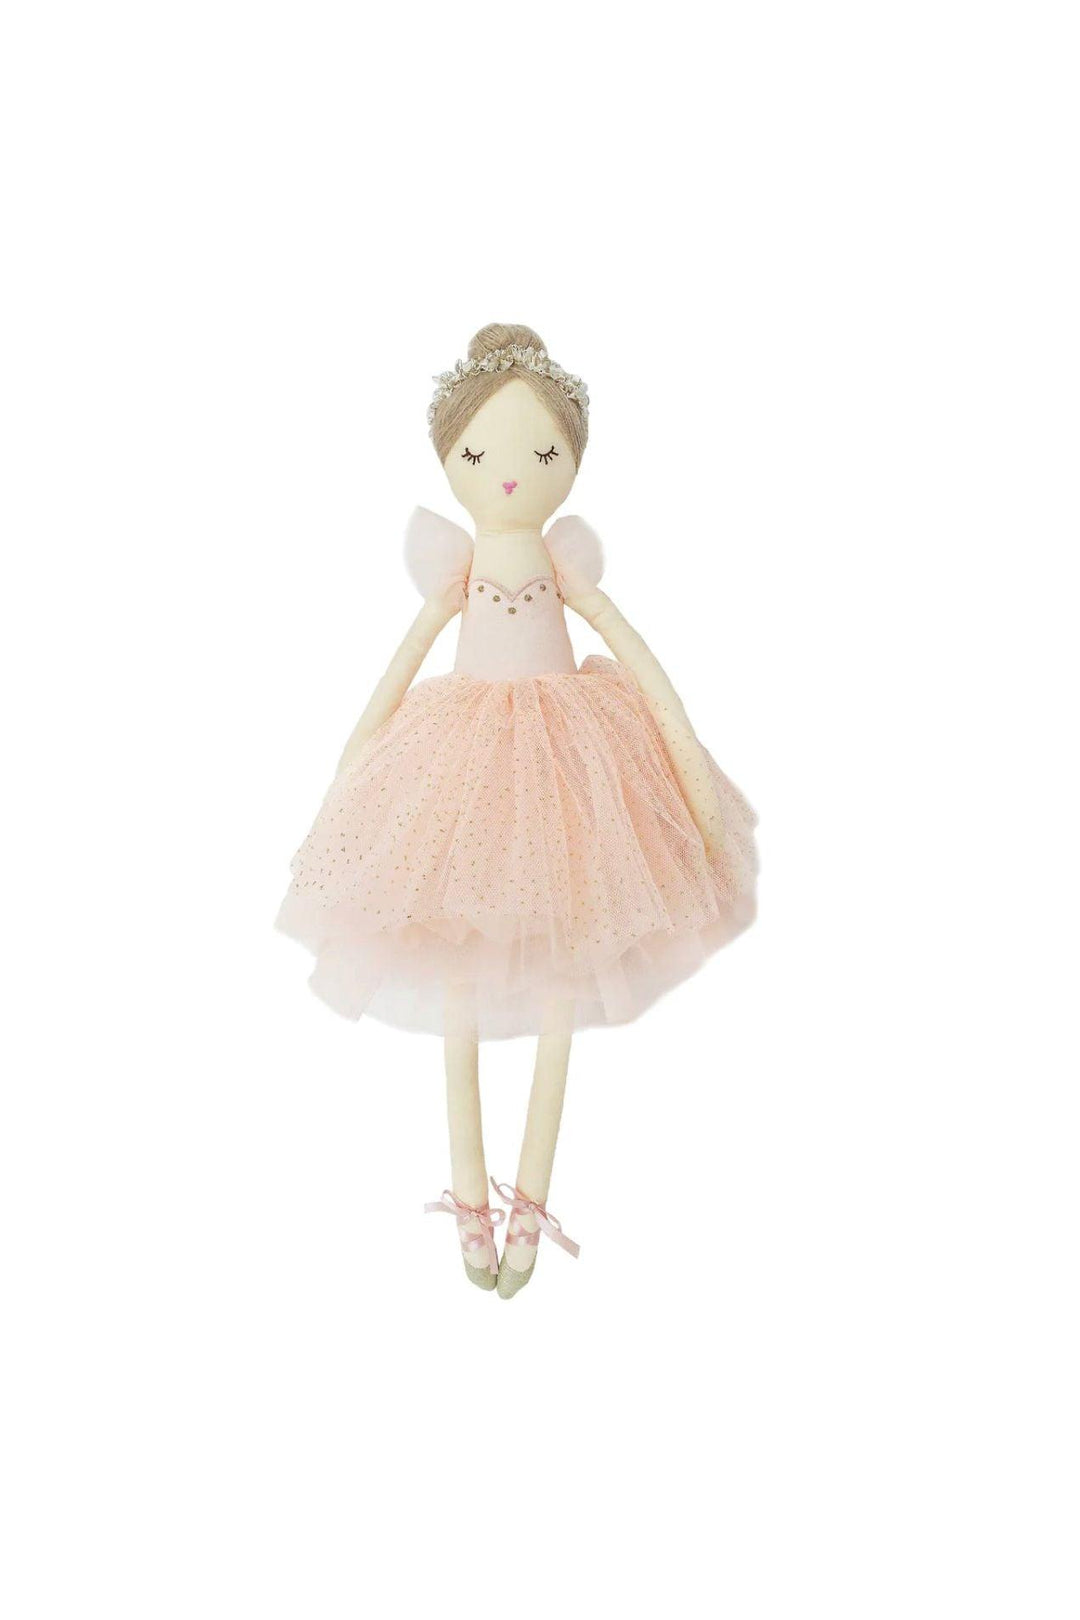 Belle Prima Ballerina - 20 Inch Heirloom Quality Ballet Doll